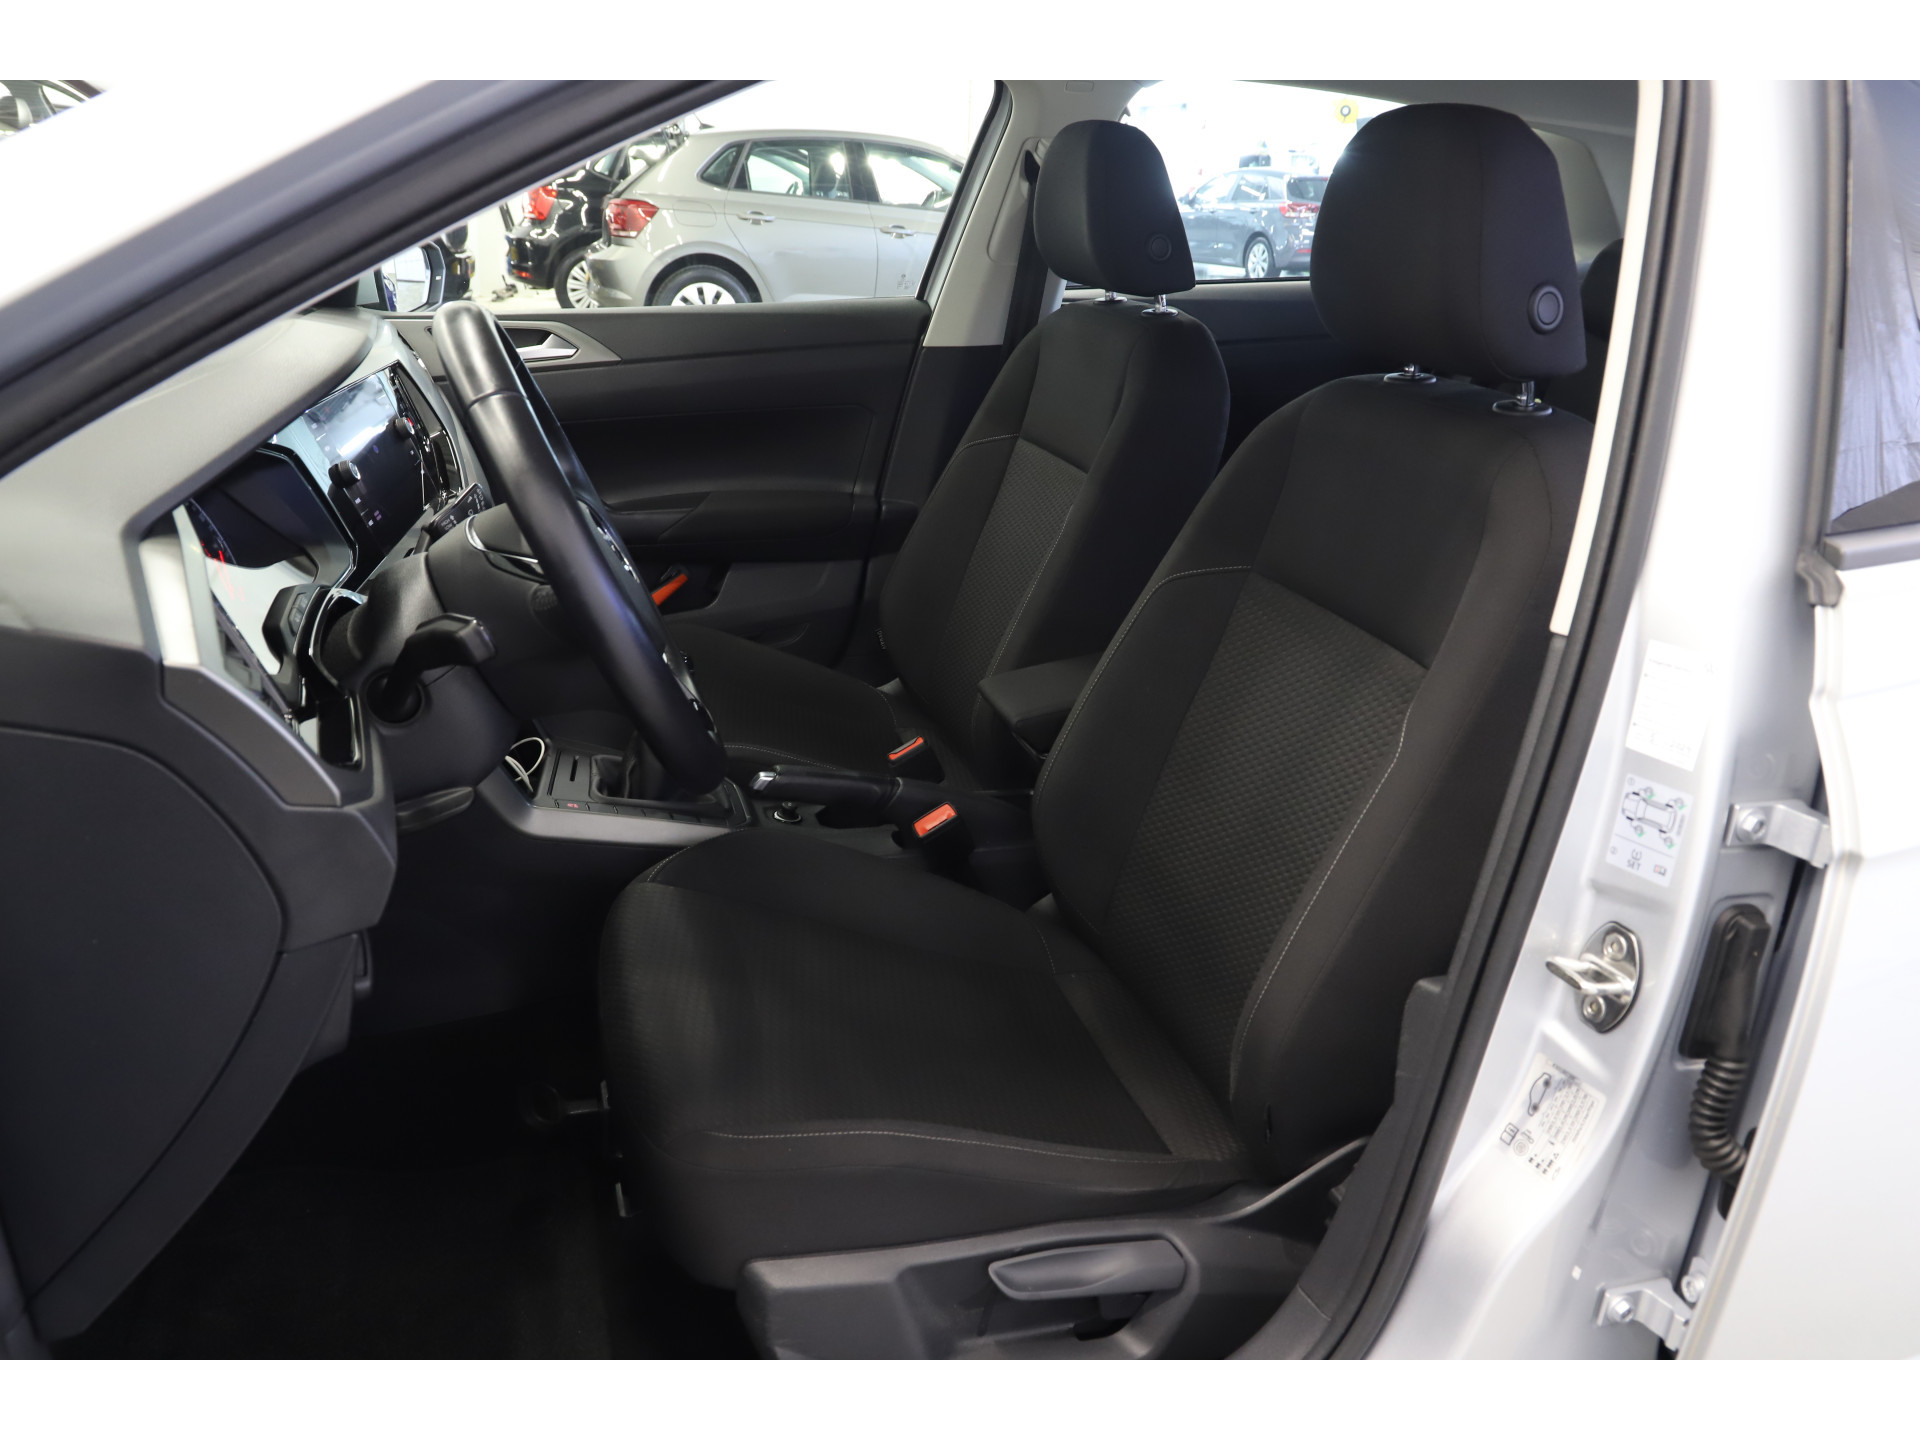 Volkswagen - Polo 1.0 MPI 75pk Comfortline - 2018